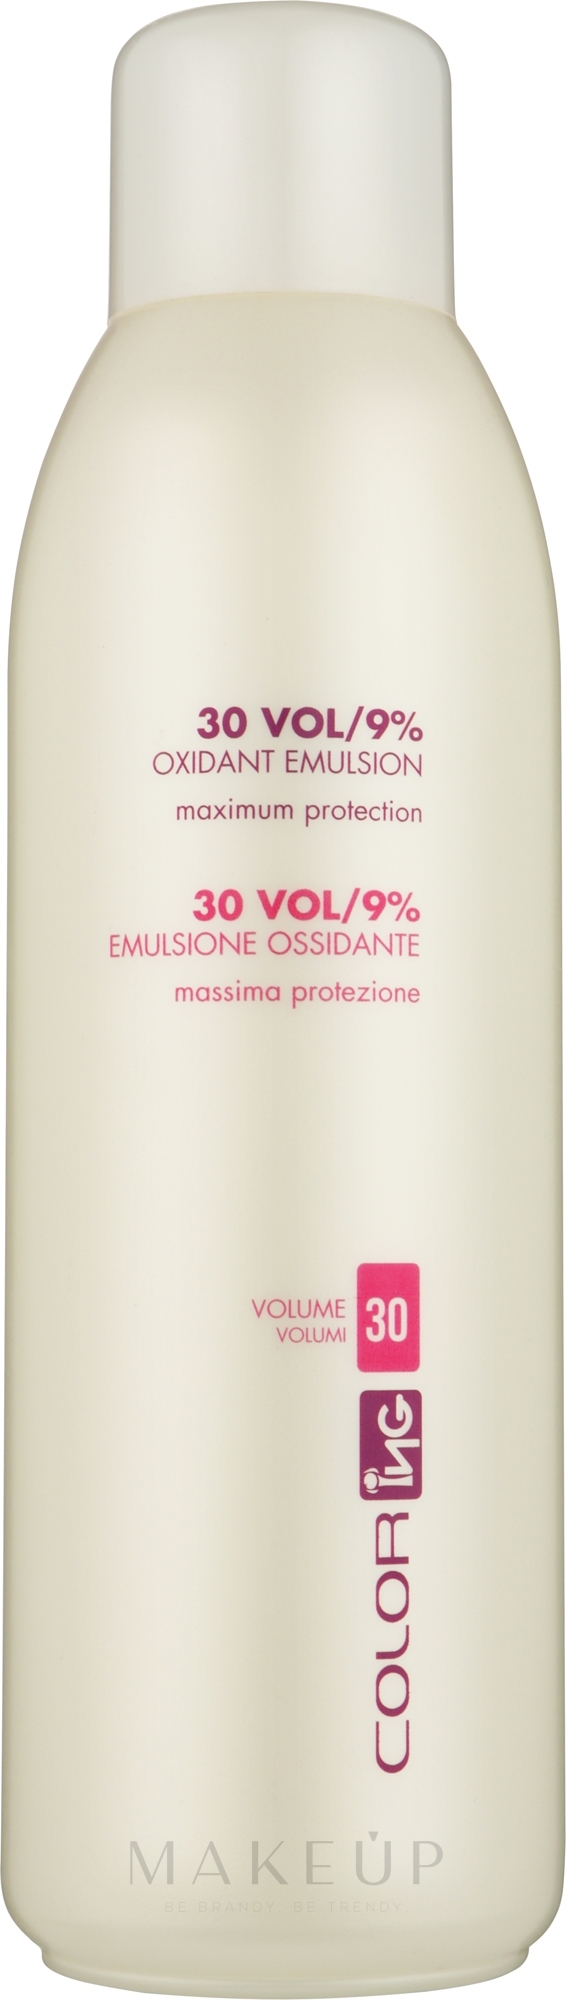 Oxidationsemulsion 9% - ING Professional Color-ING Oxidante Emulsion — Foto 1000 ml